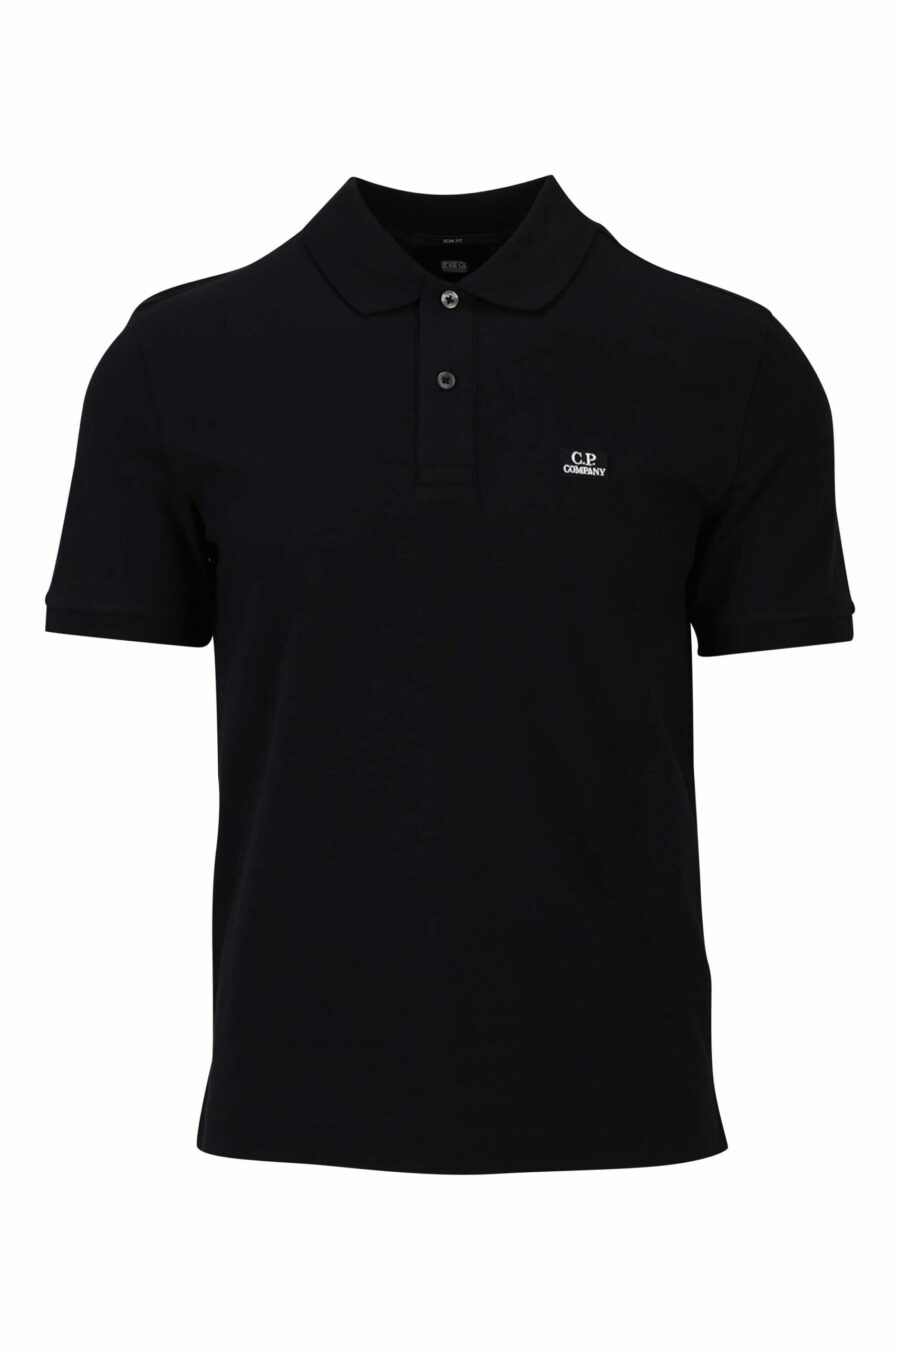 Schwarzes Poloshirt mit Mini-Logoaufnäher - 7620943564884 1 skaliert